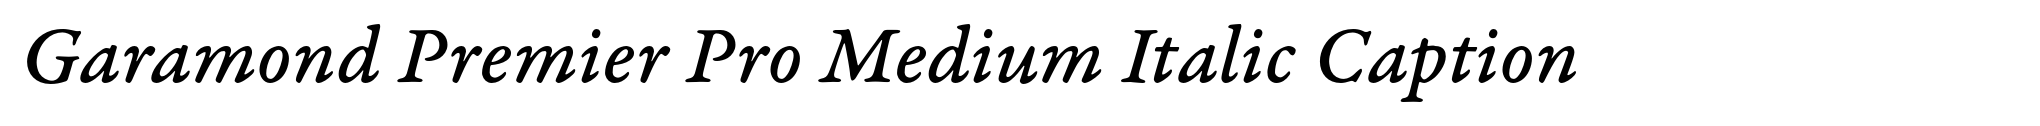 Garamond Premier Pro Medium Italic Caption image